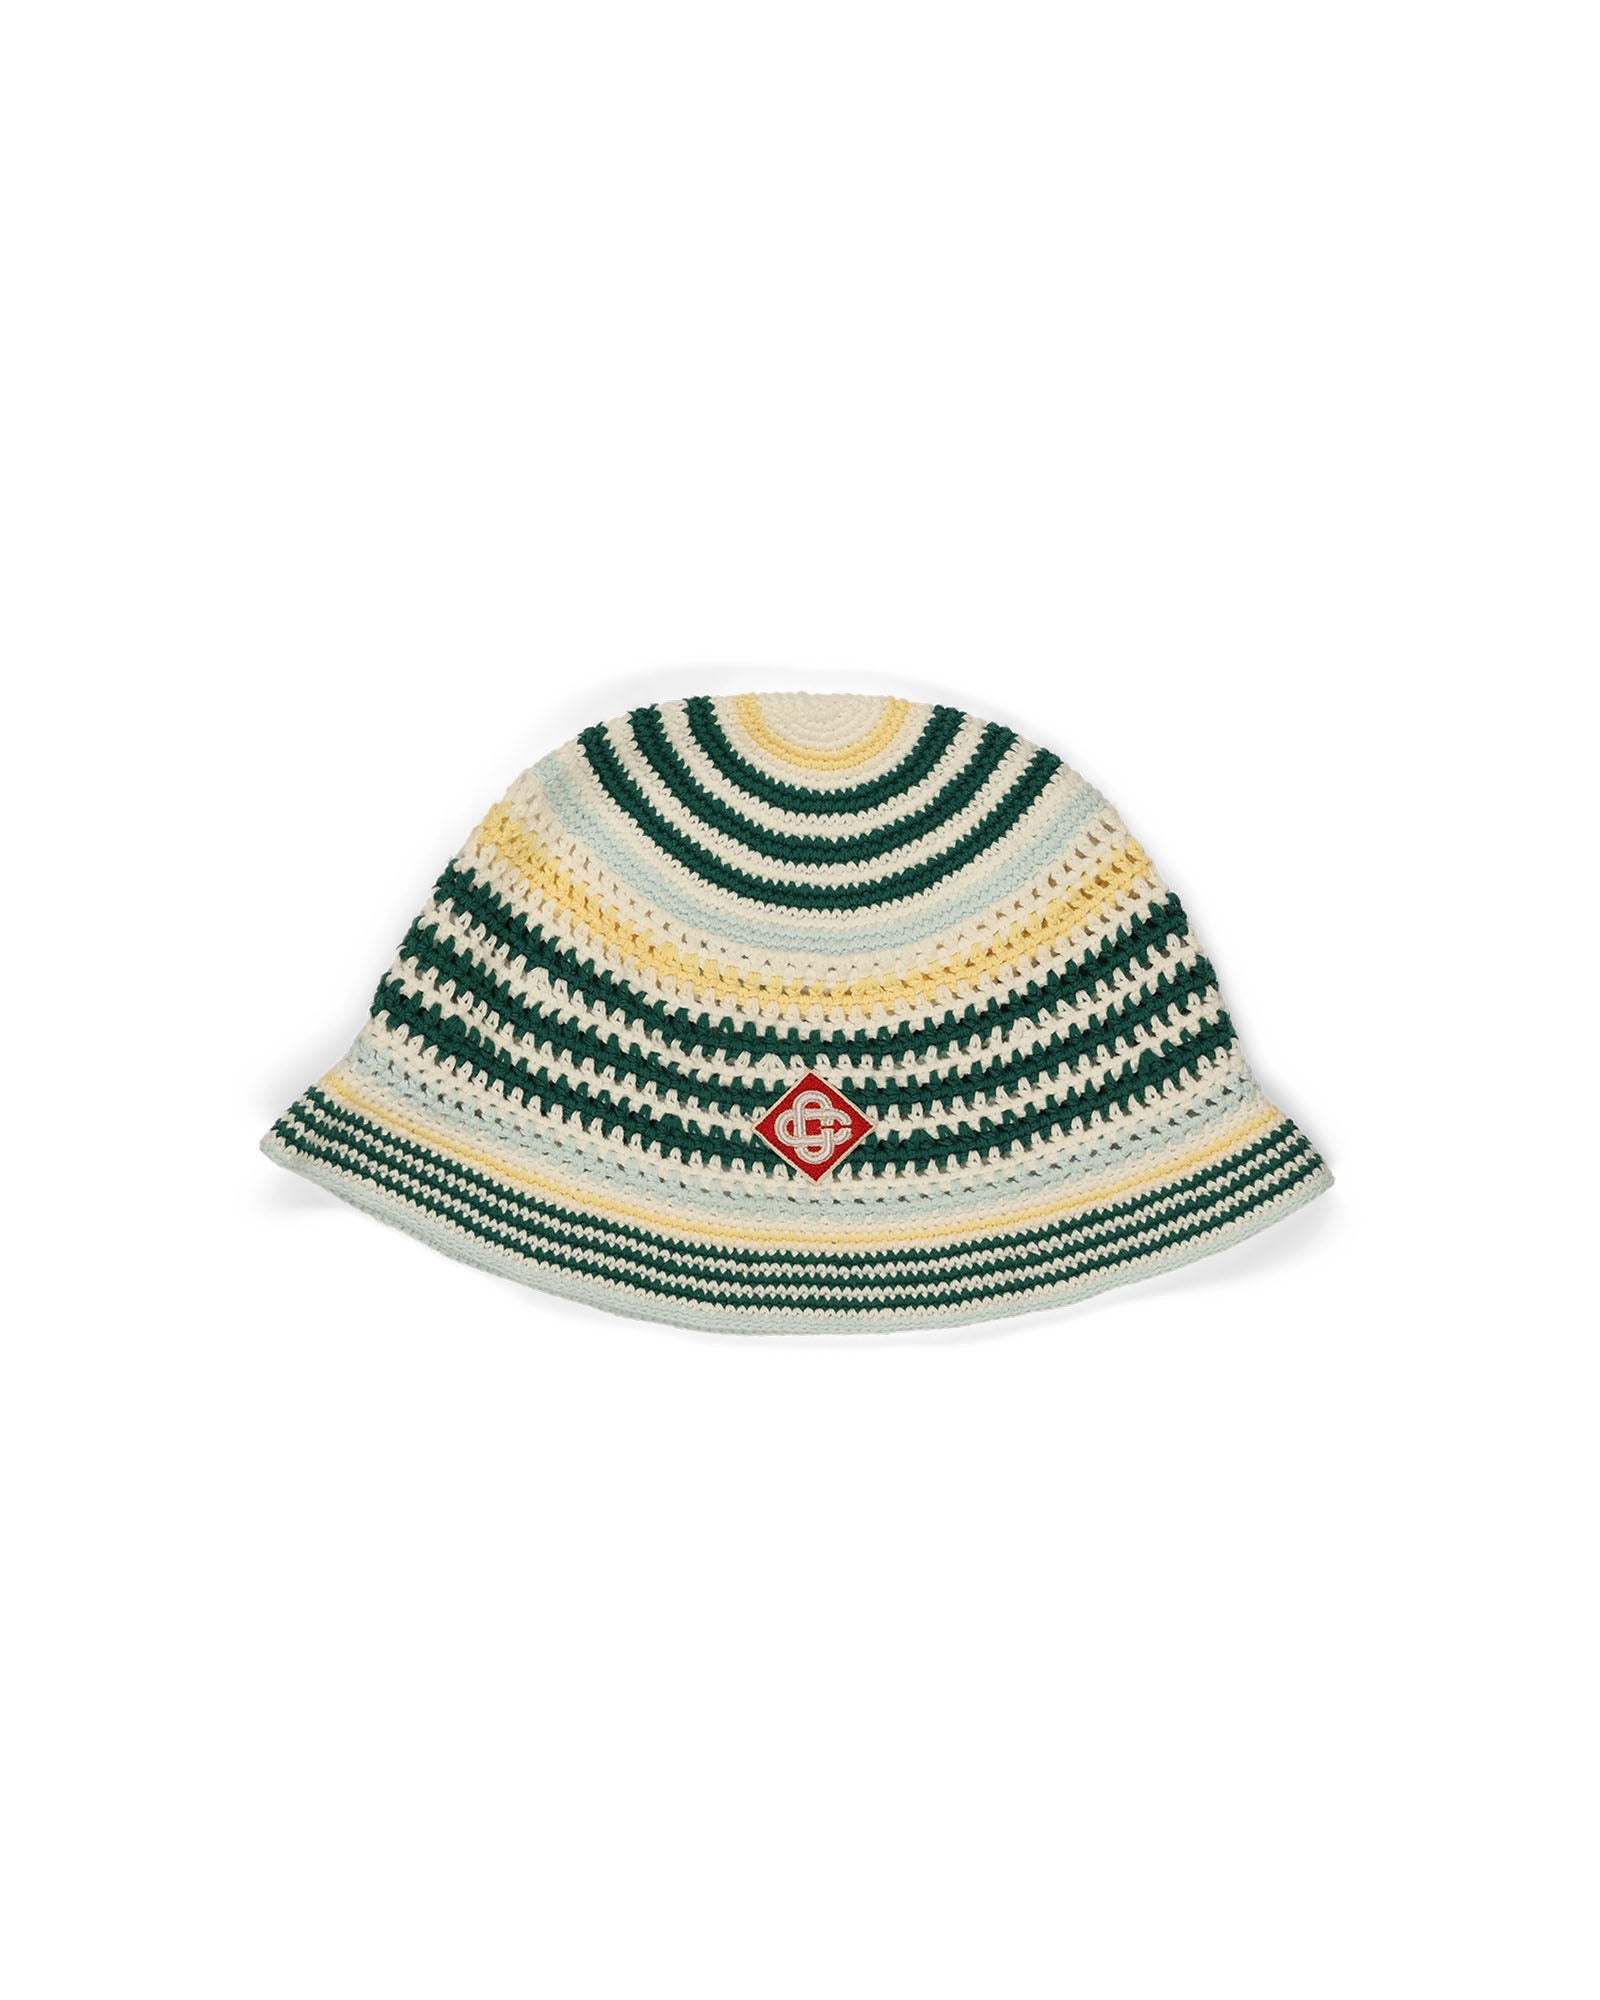 Monogram Crochet Hat - 1